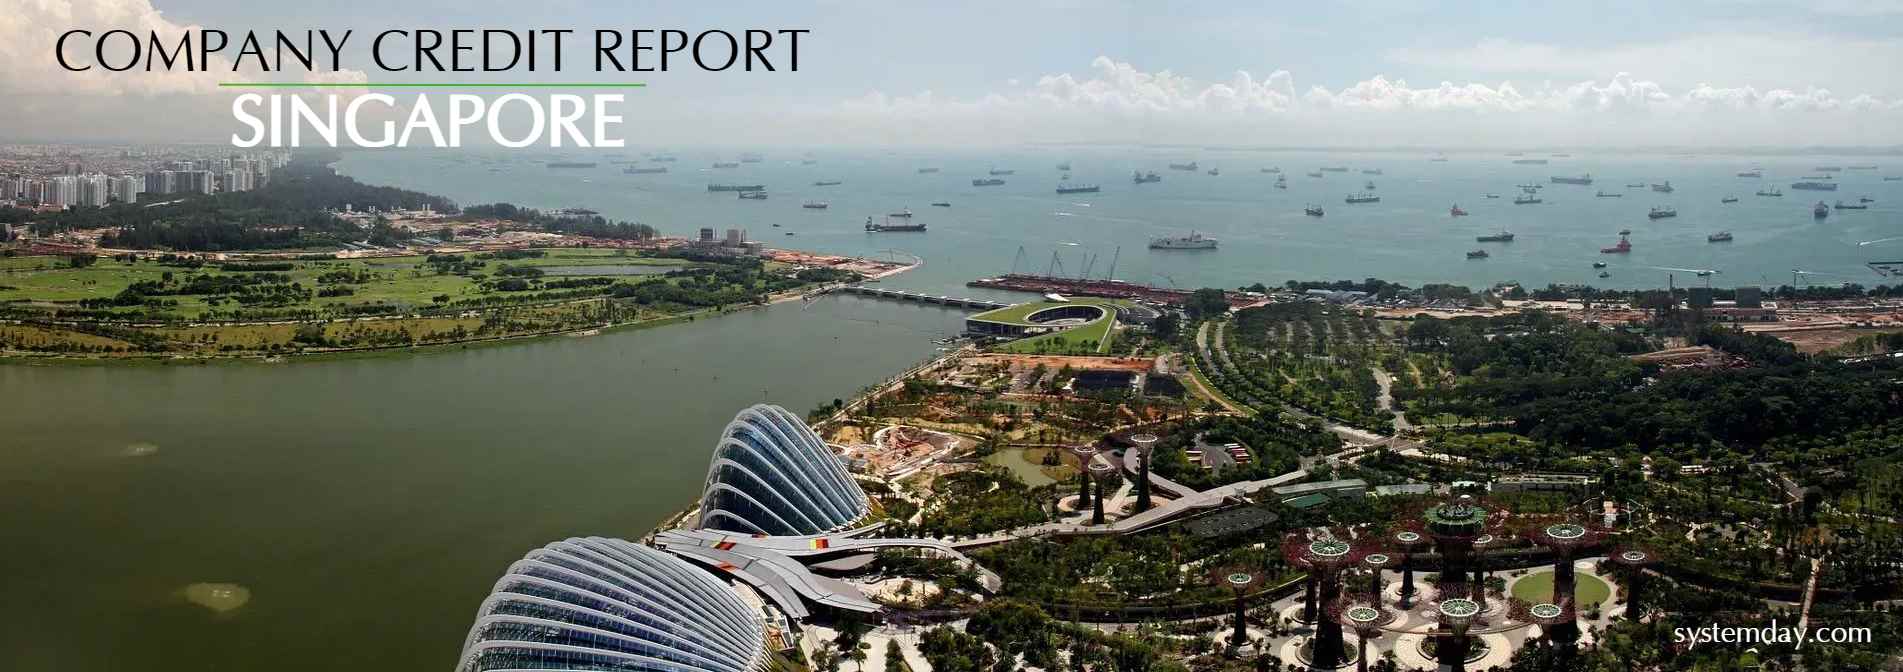 Singapore Company Credit Report